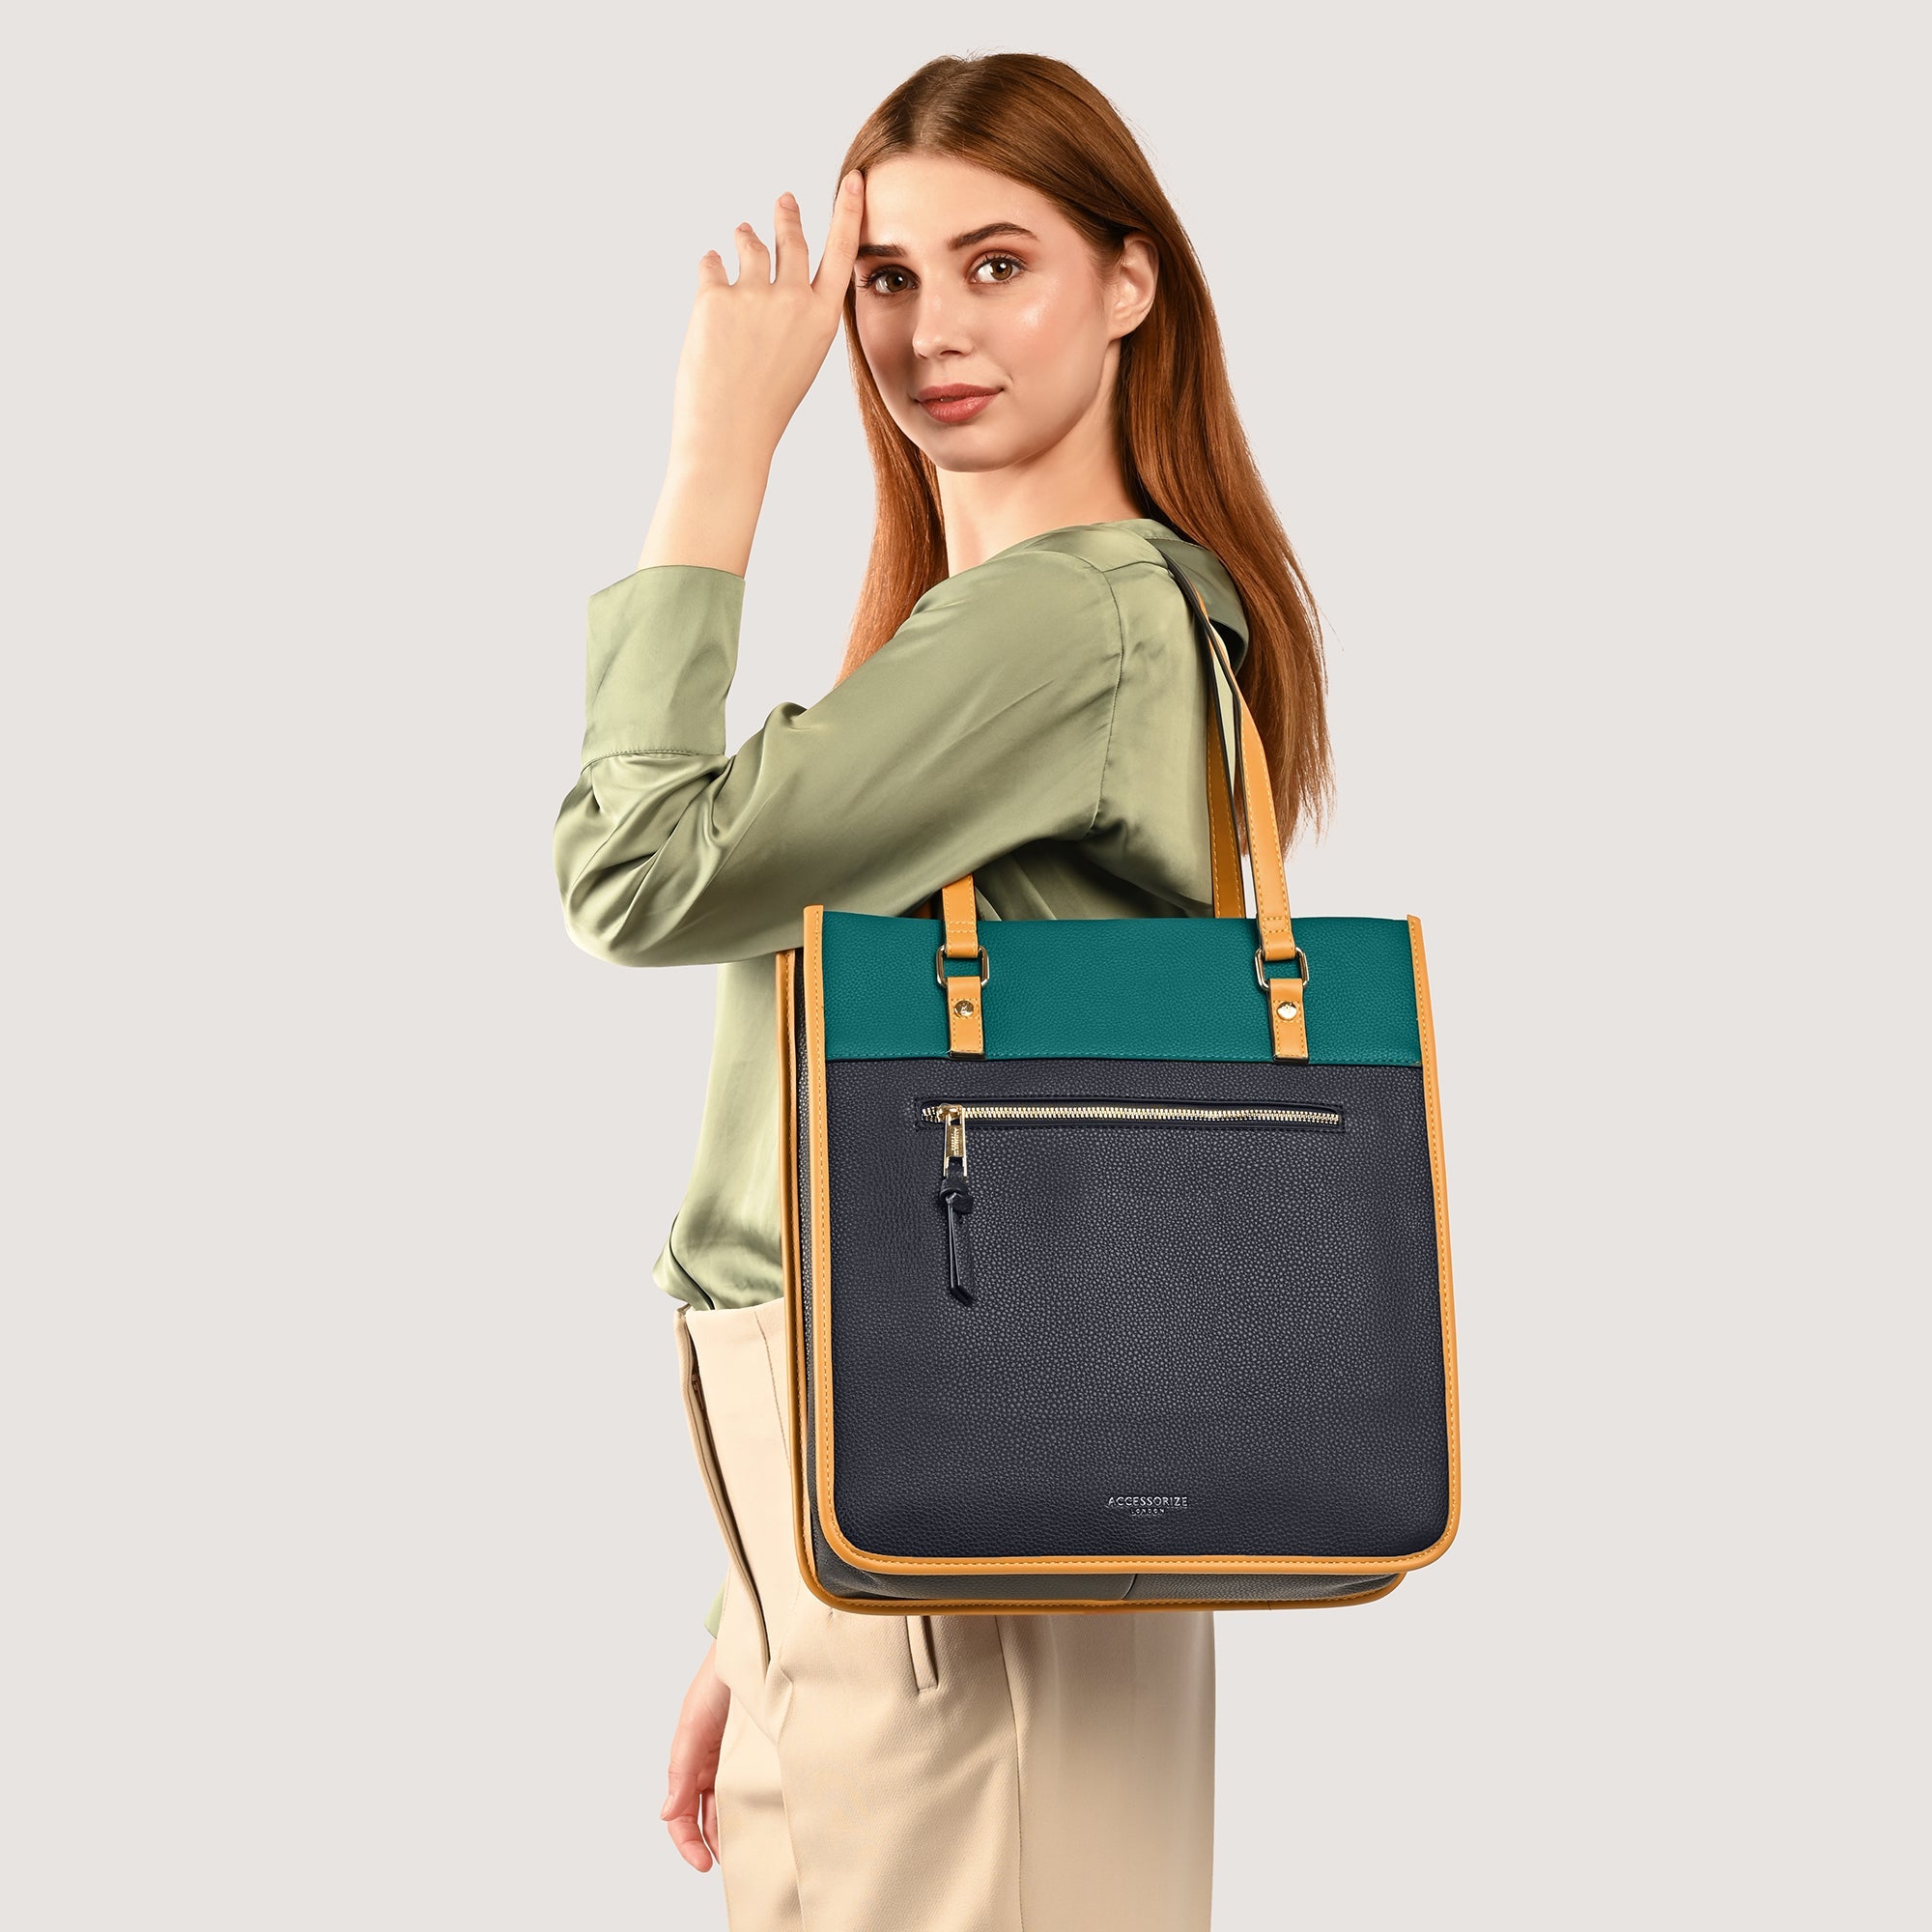 Handbags For Women - Buy Handbags For Women Online Starting at Just ₹165 |  Meesho